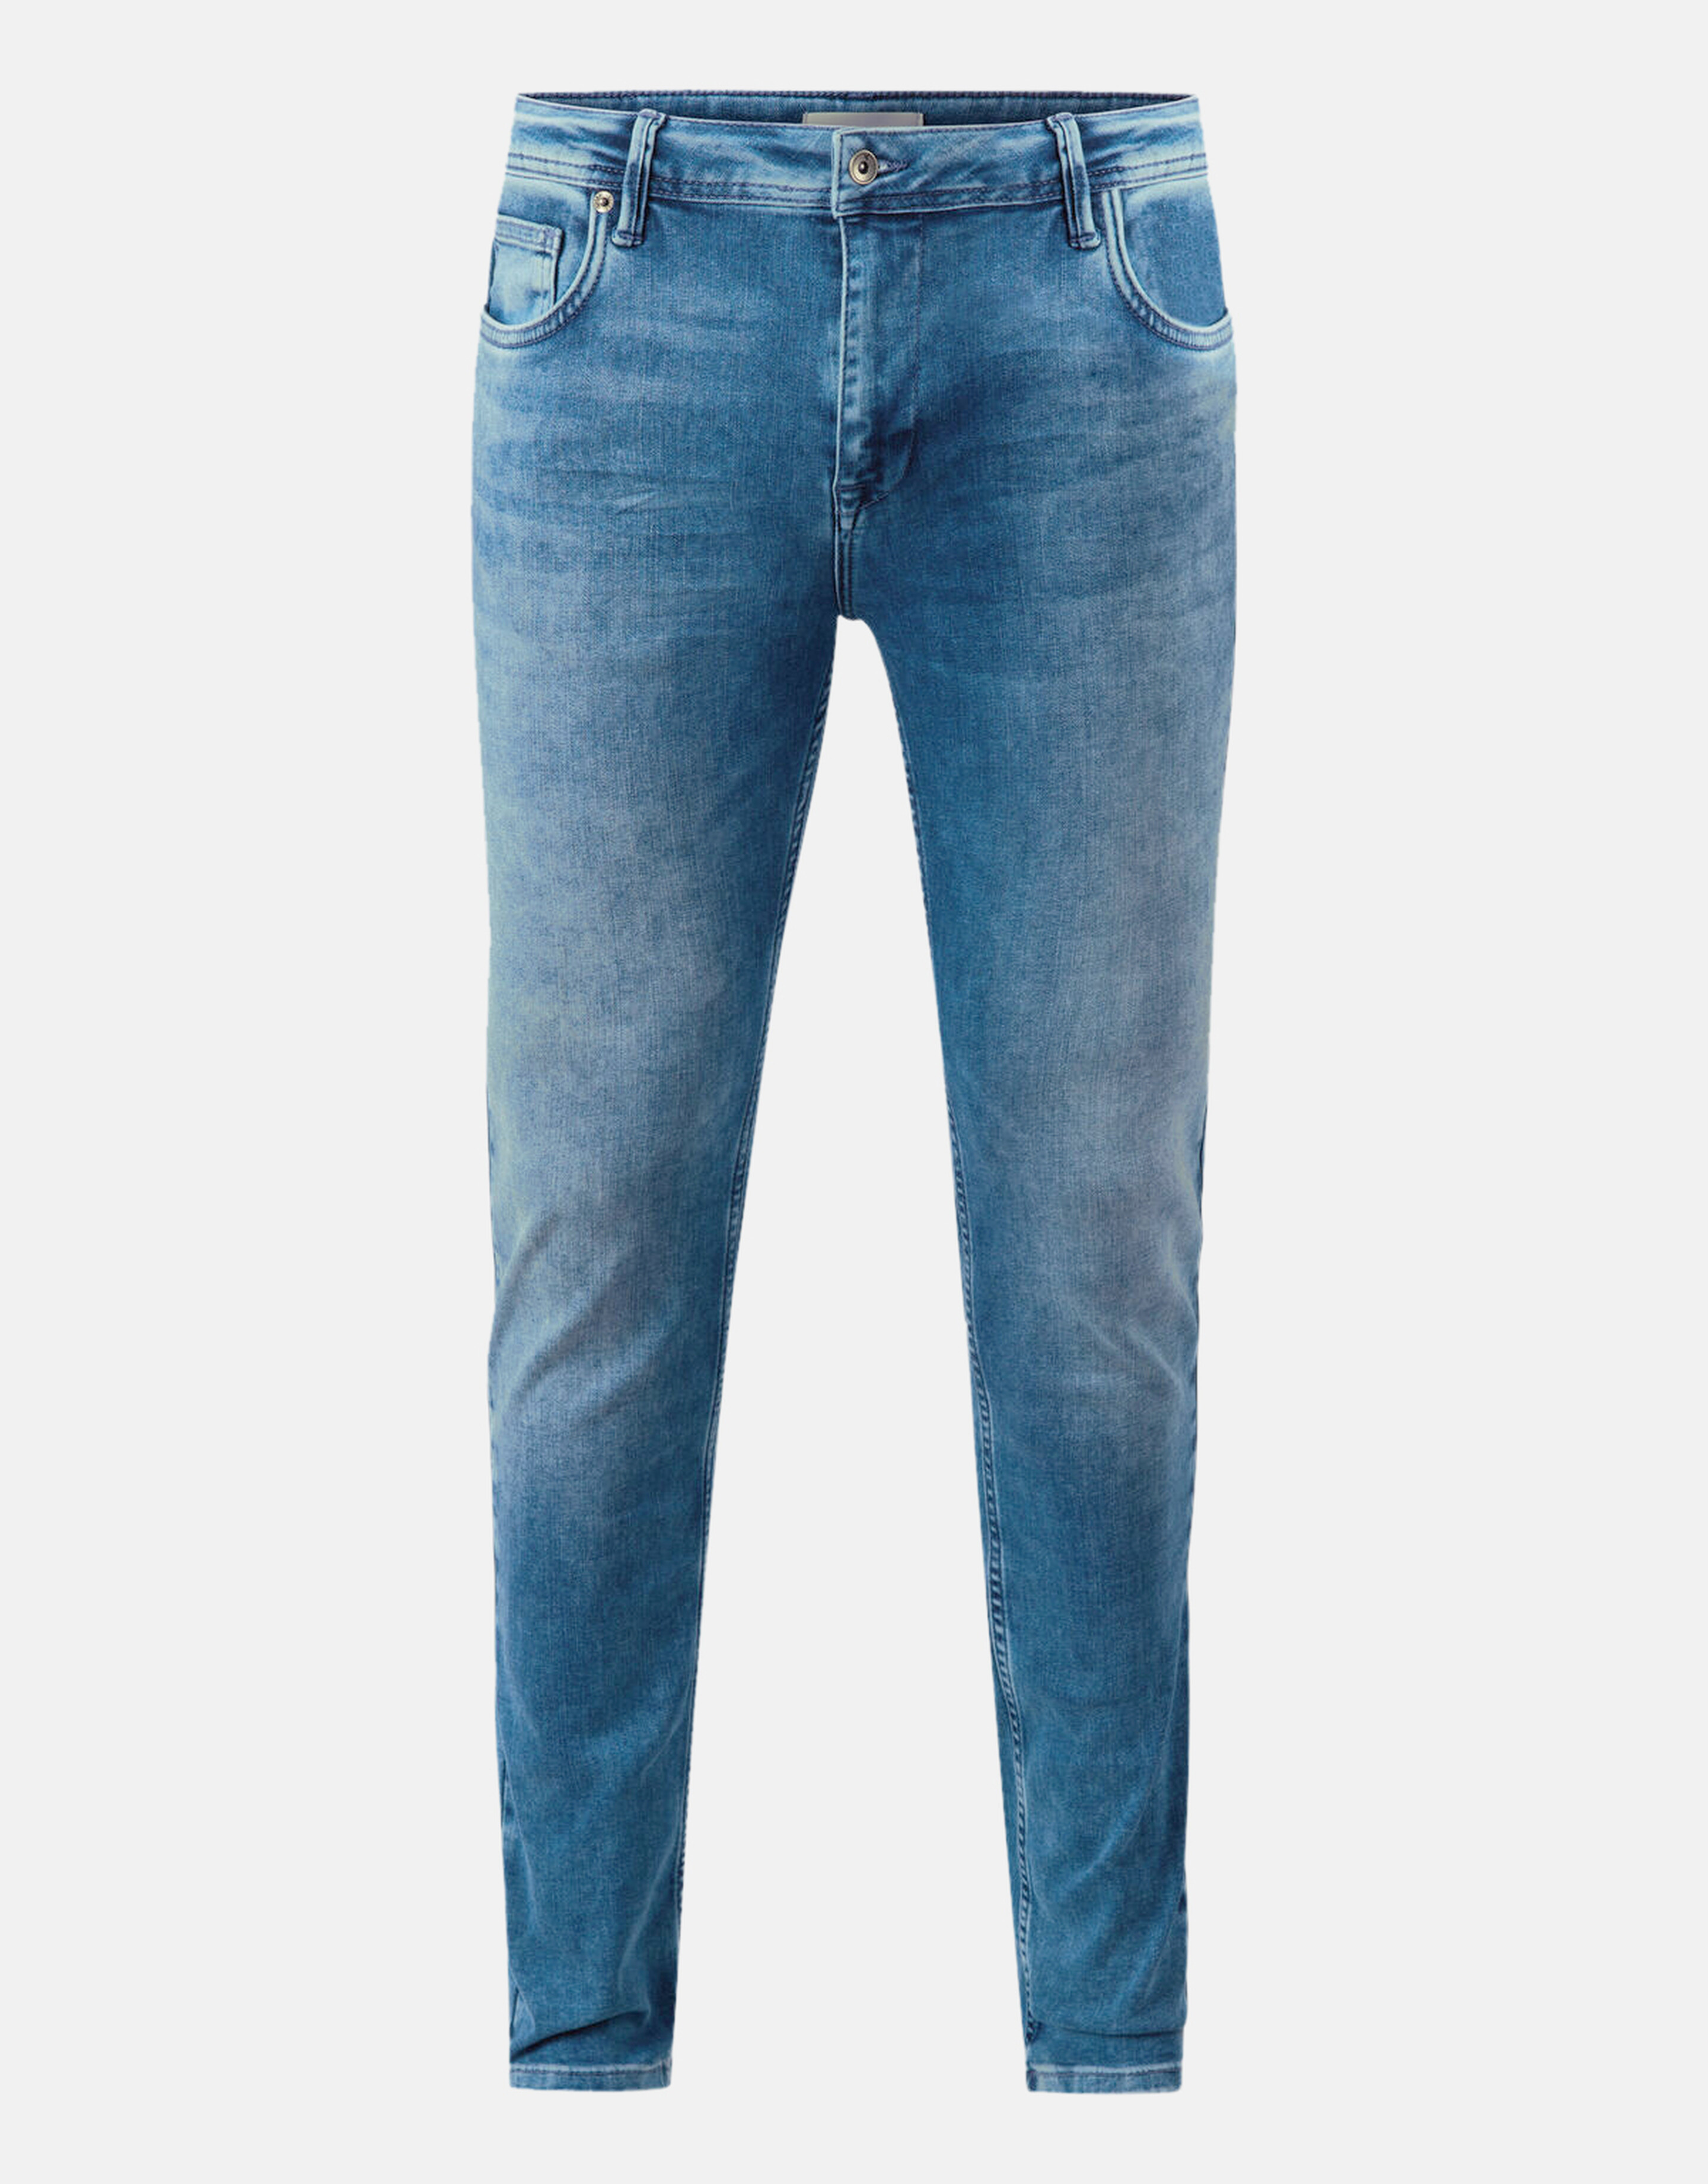 Slim Jeans Blau Länge 32 Refill